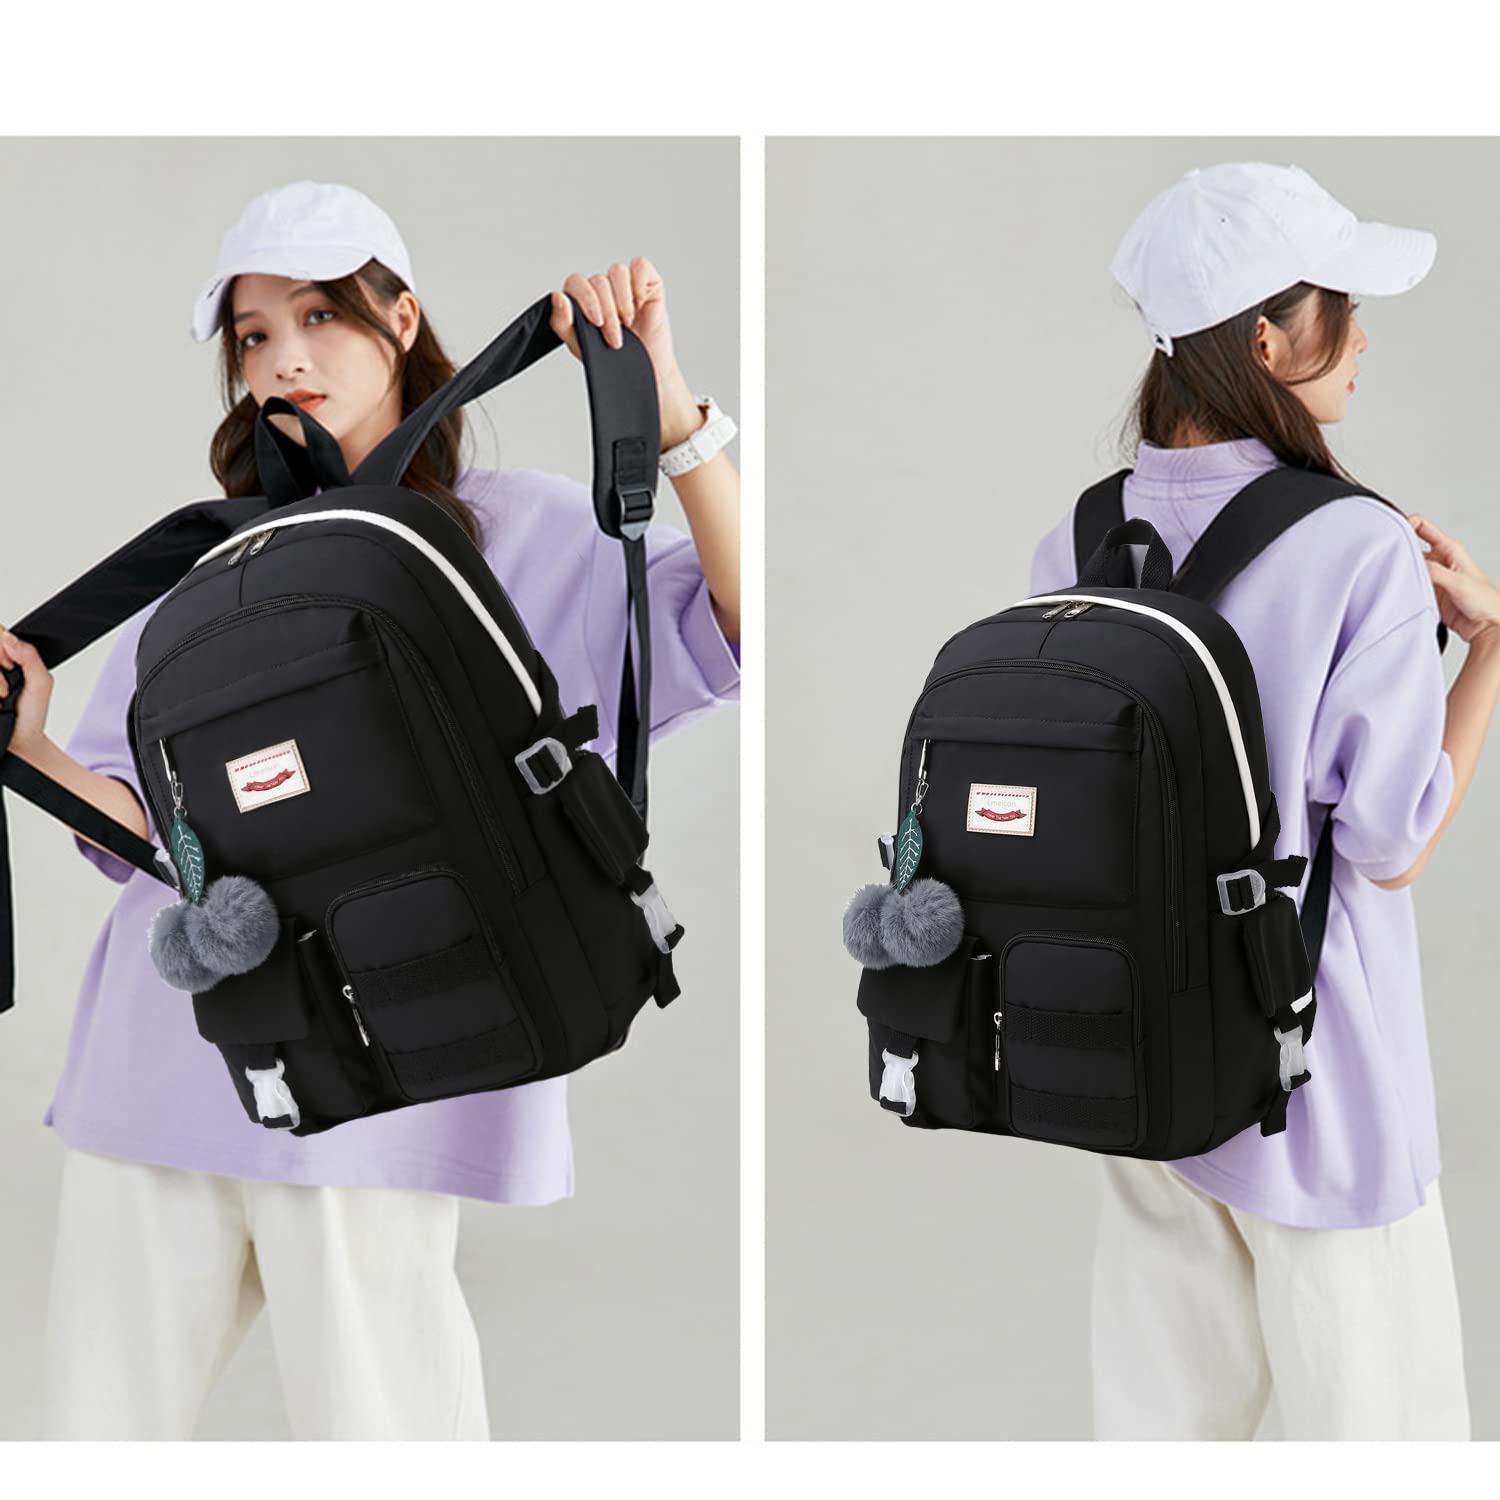 Lmeison Girl Backpack Waterproof, Cute Bookbag for Women Teen Kids